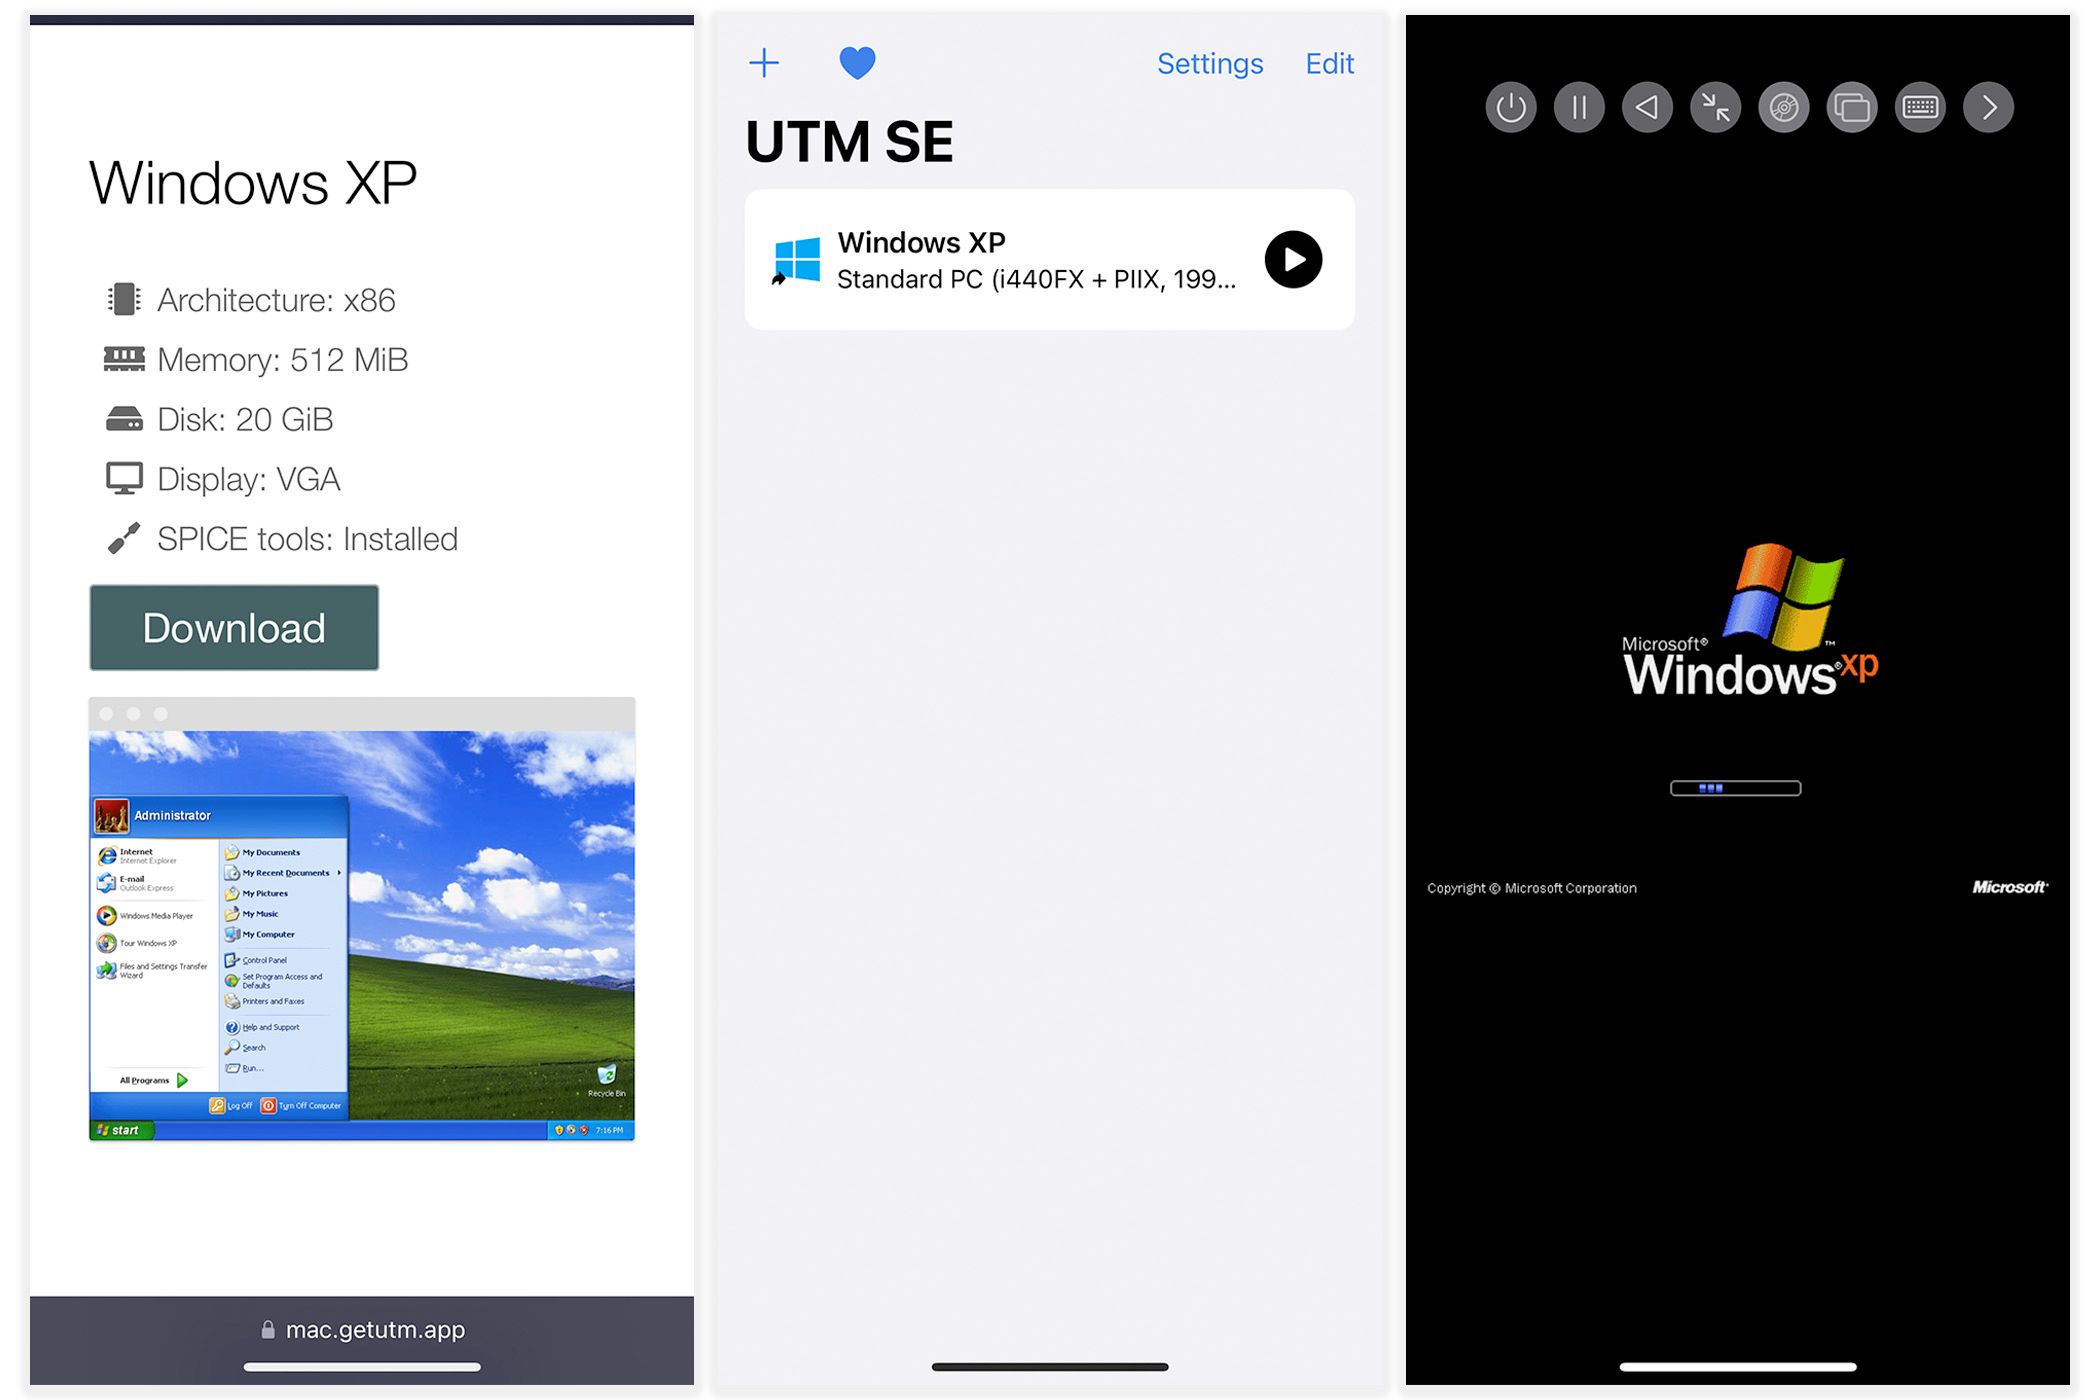 Setting up Windows XP emulation on an iPhone through UTM SE.